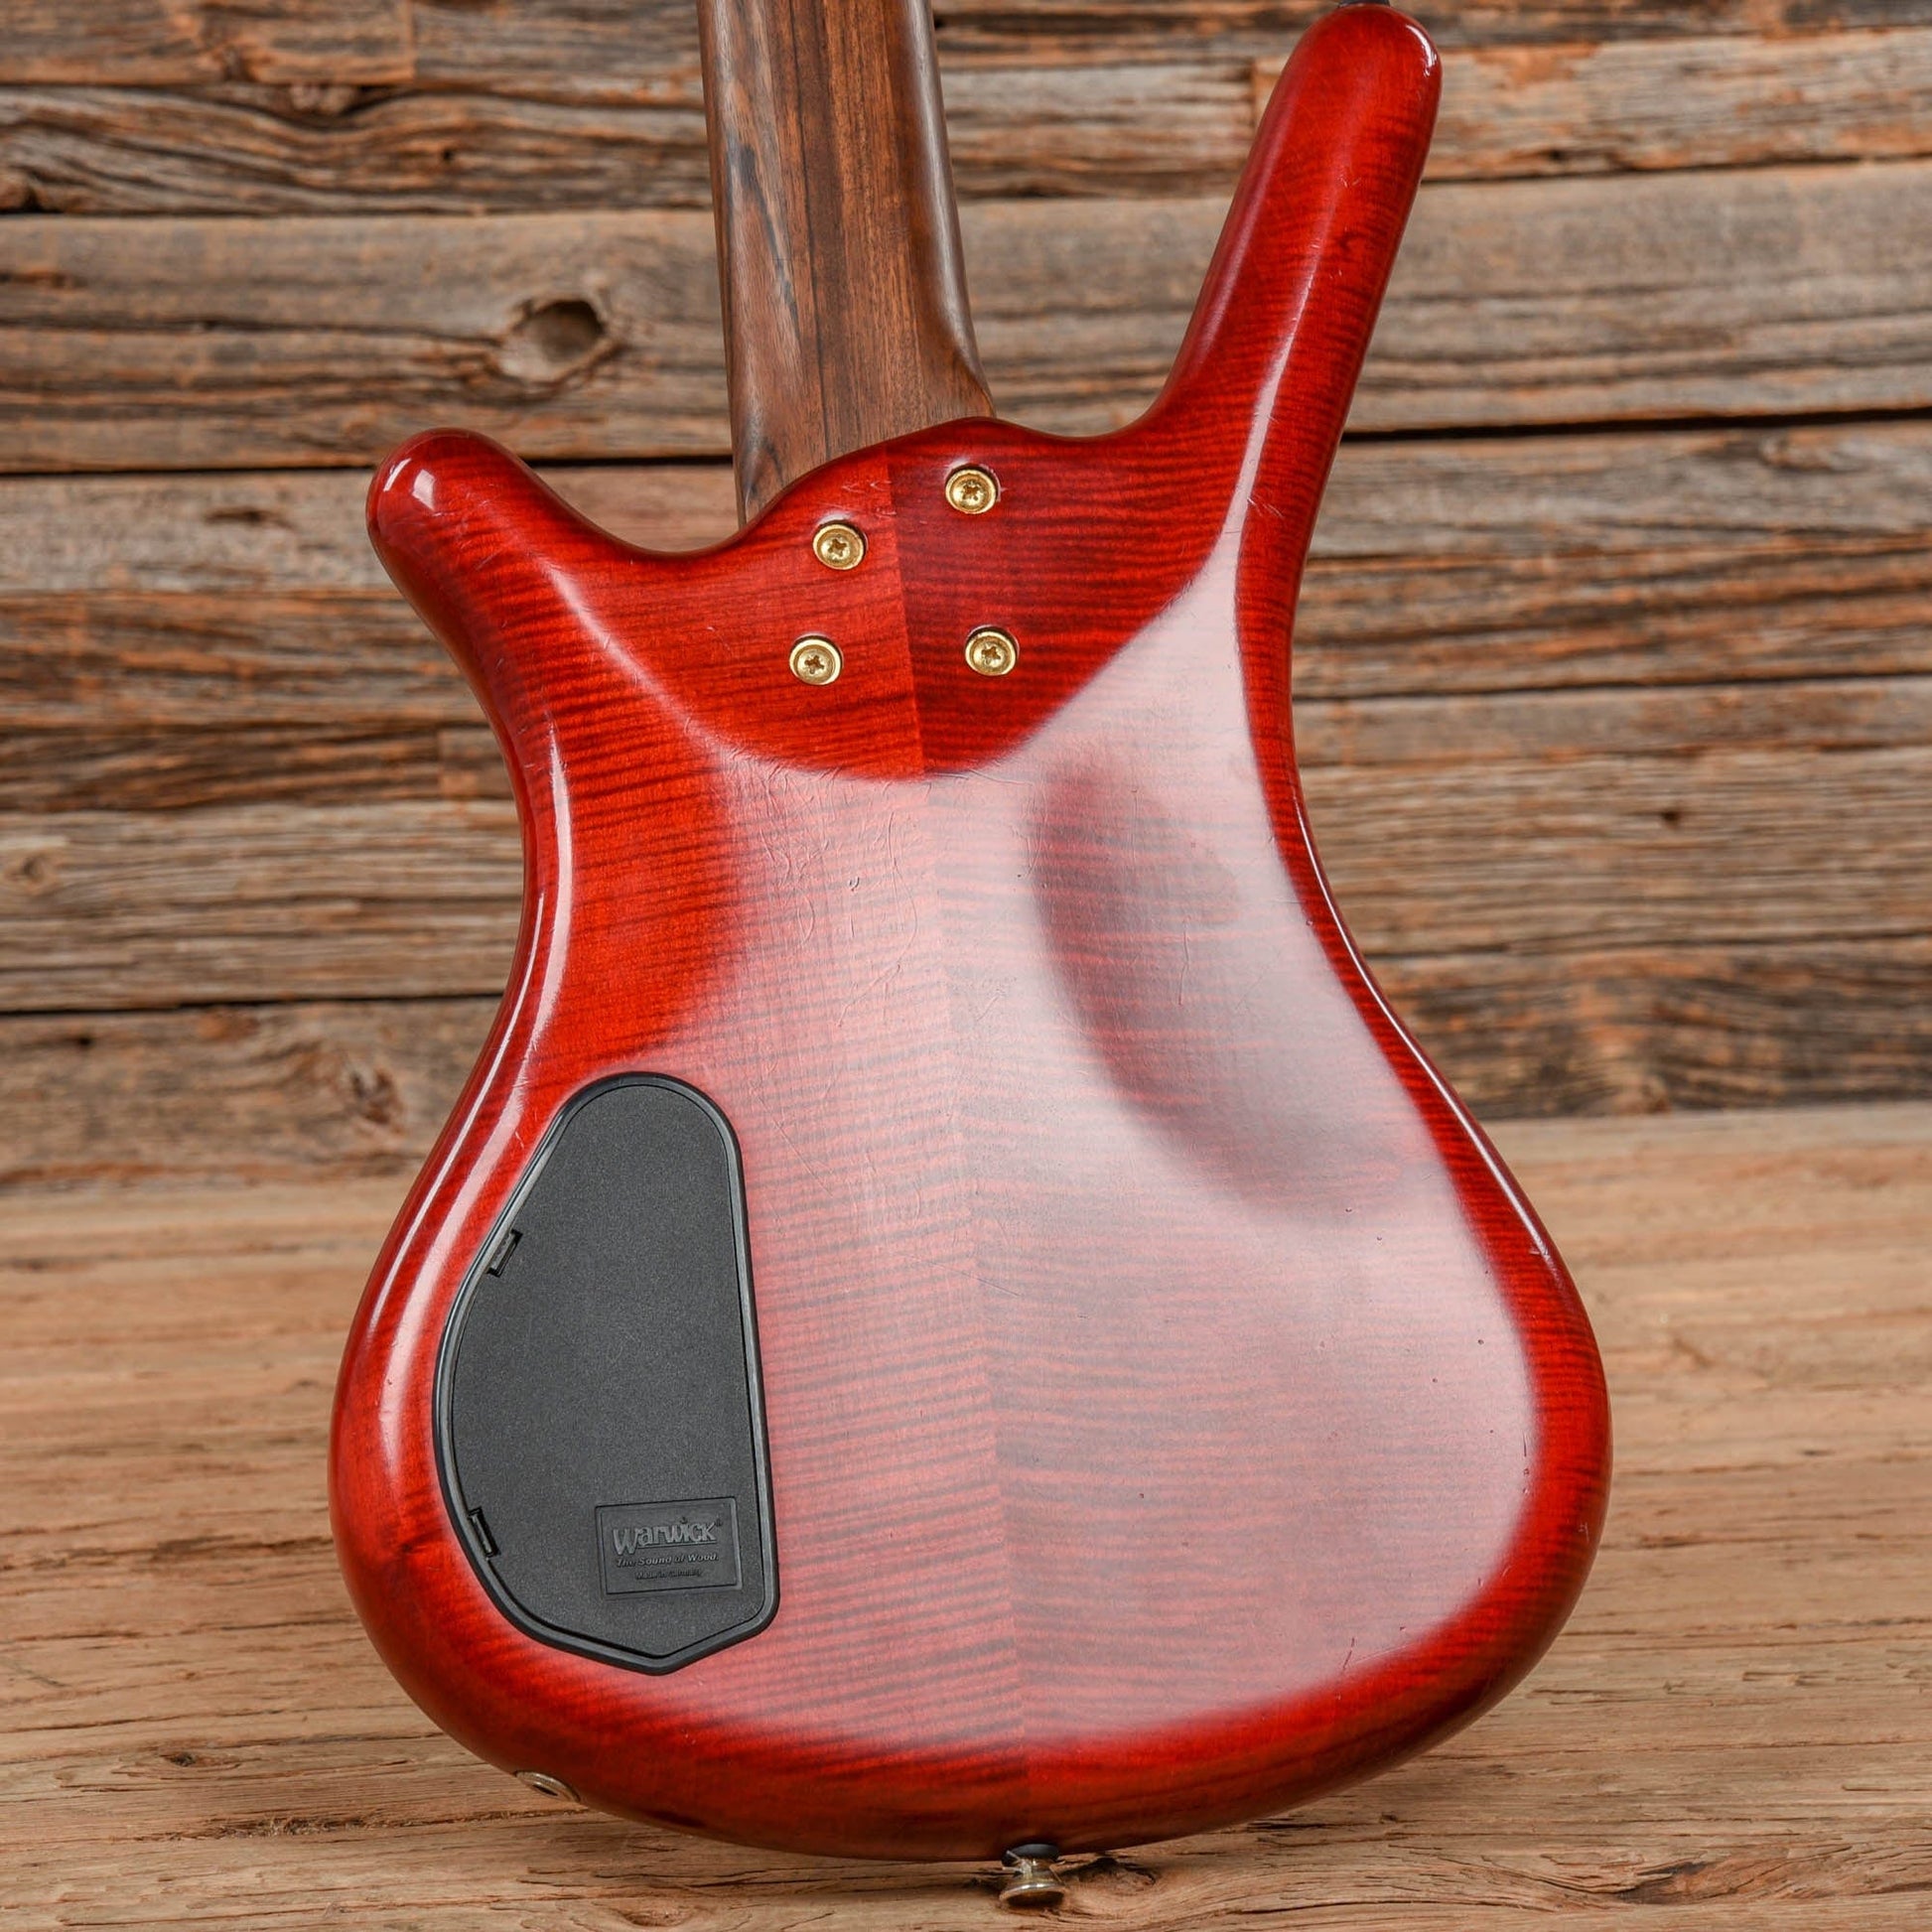 Warwick Corvette Proline 5 Red 2002 Bass Guitars / 5-String or More